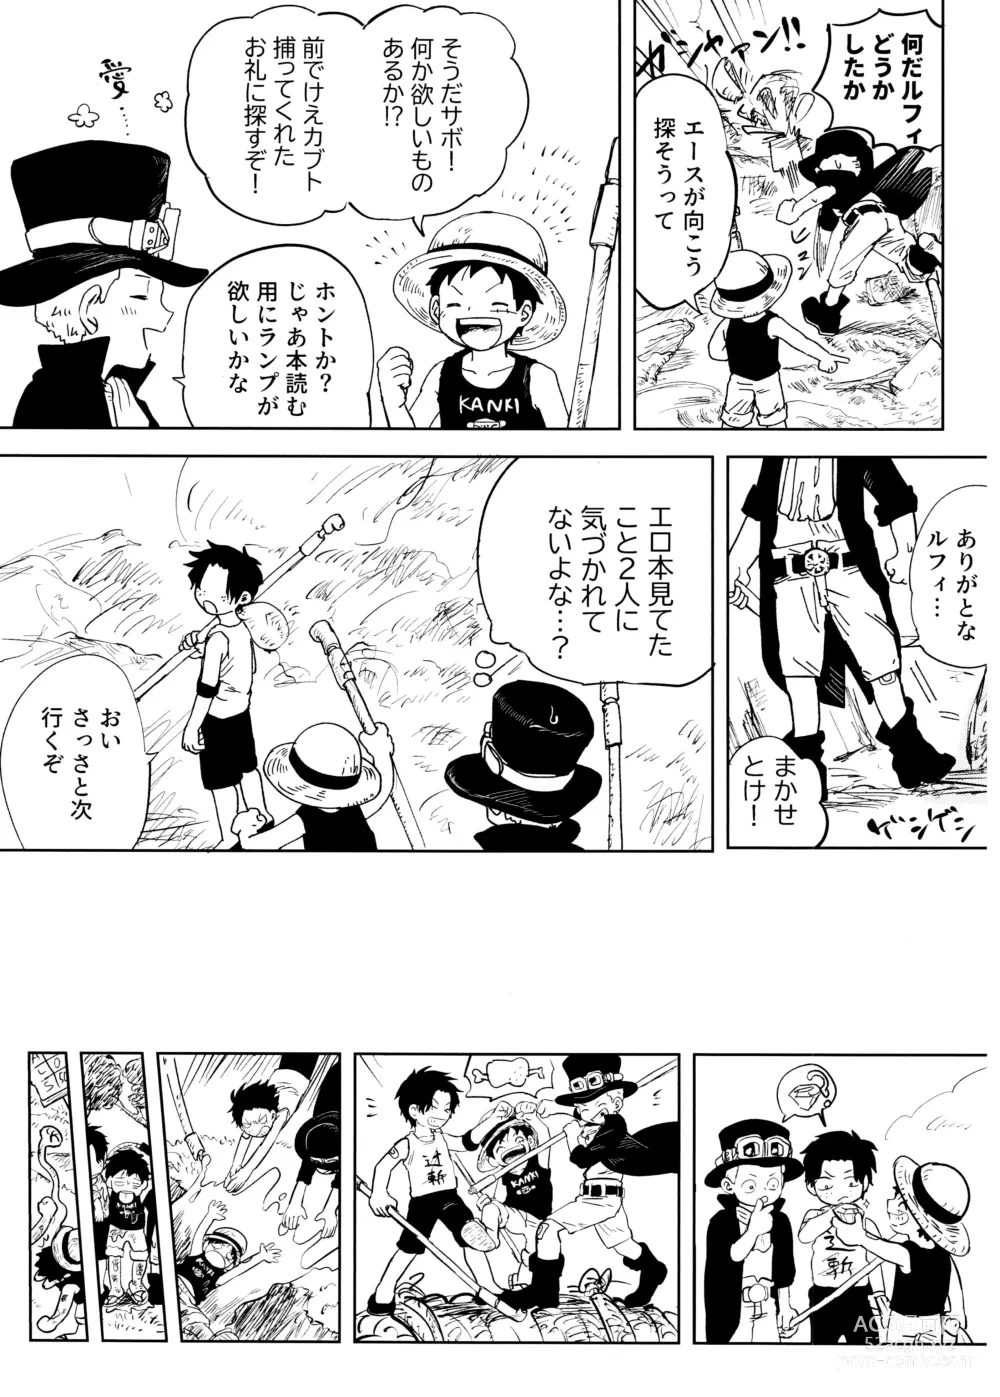 Page 6 of doujinshi Himitsu no Colubo Yama